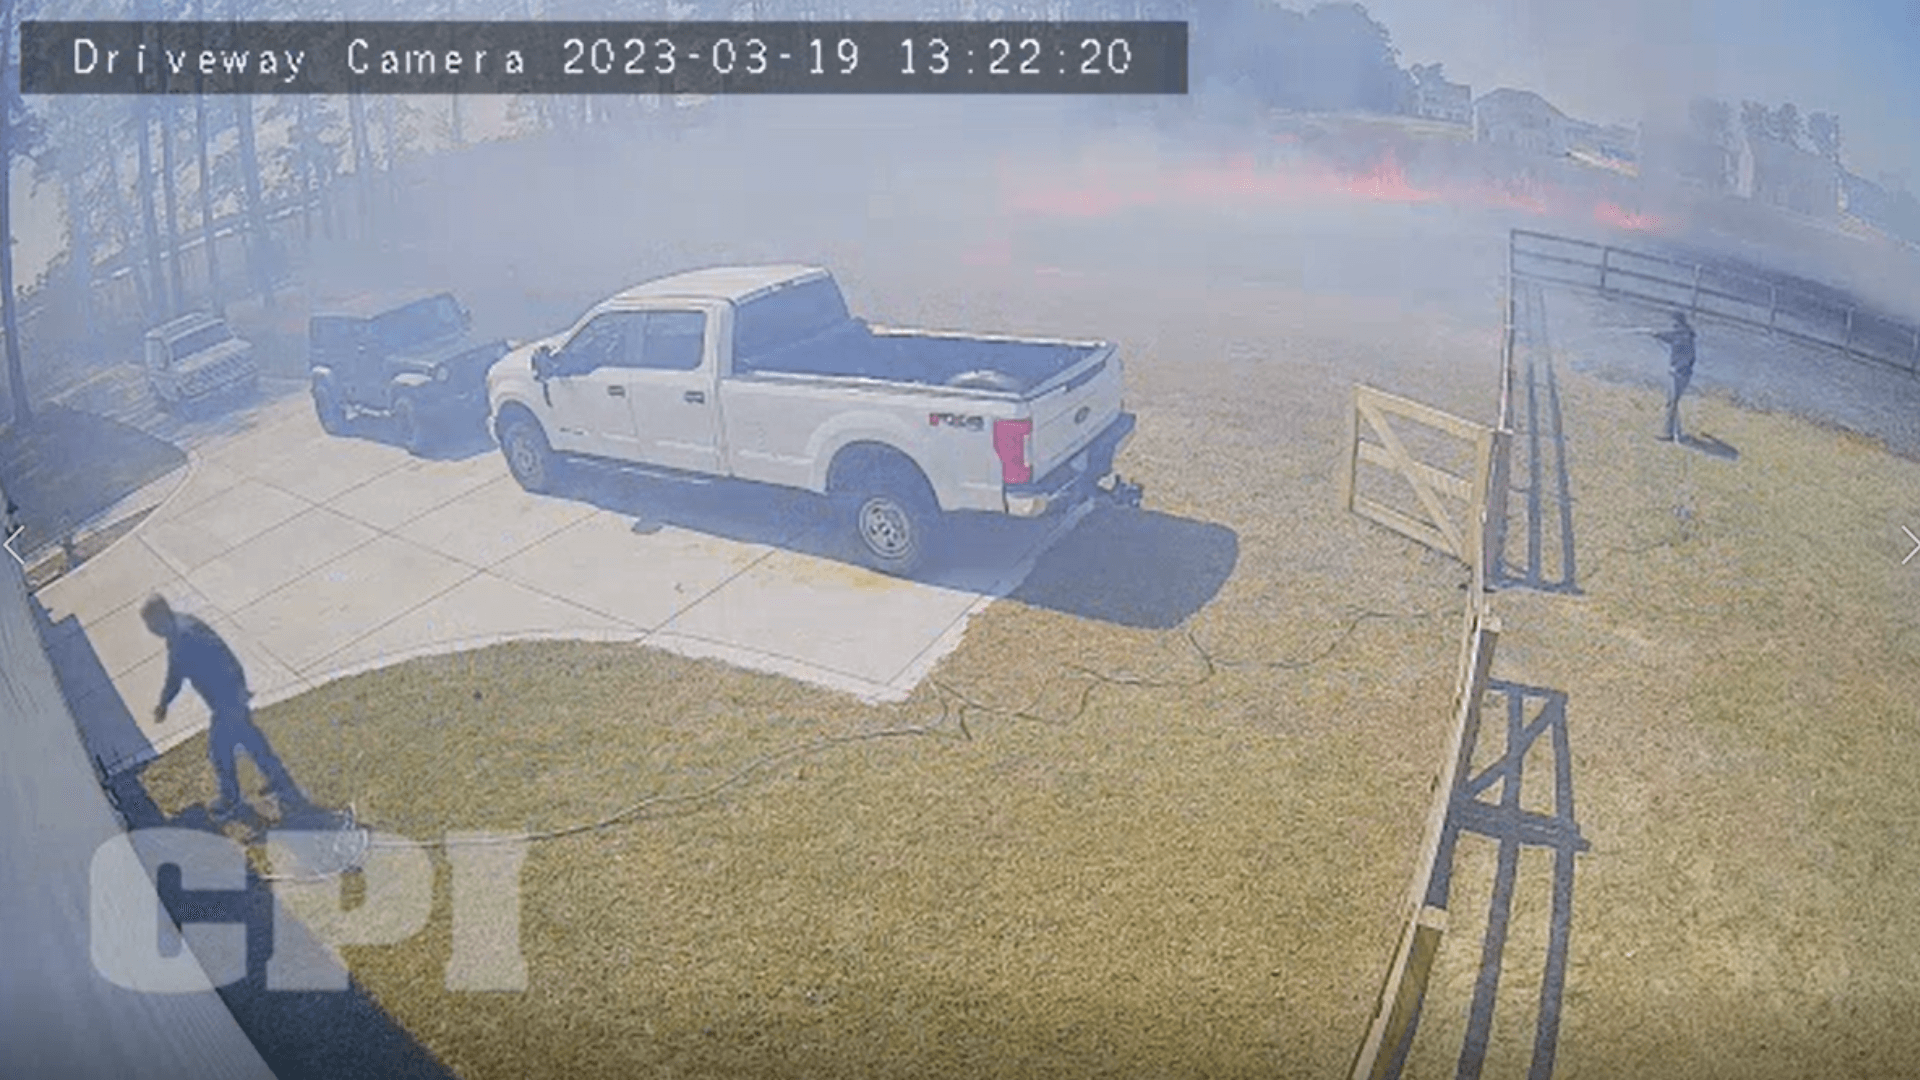 CPI Camera Captures Brushfire